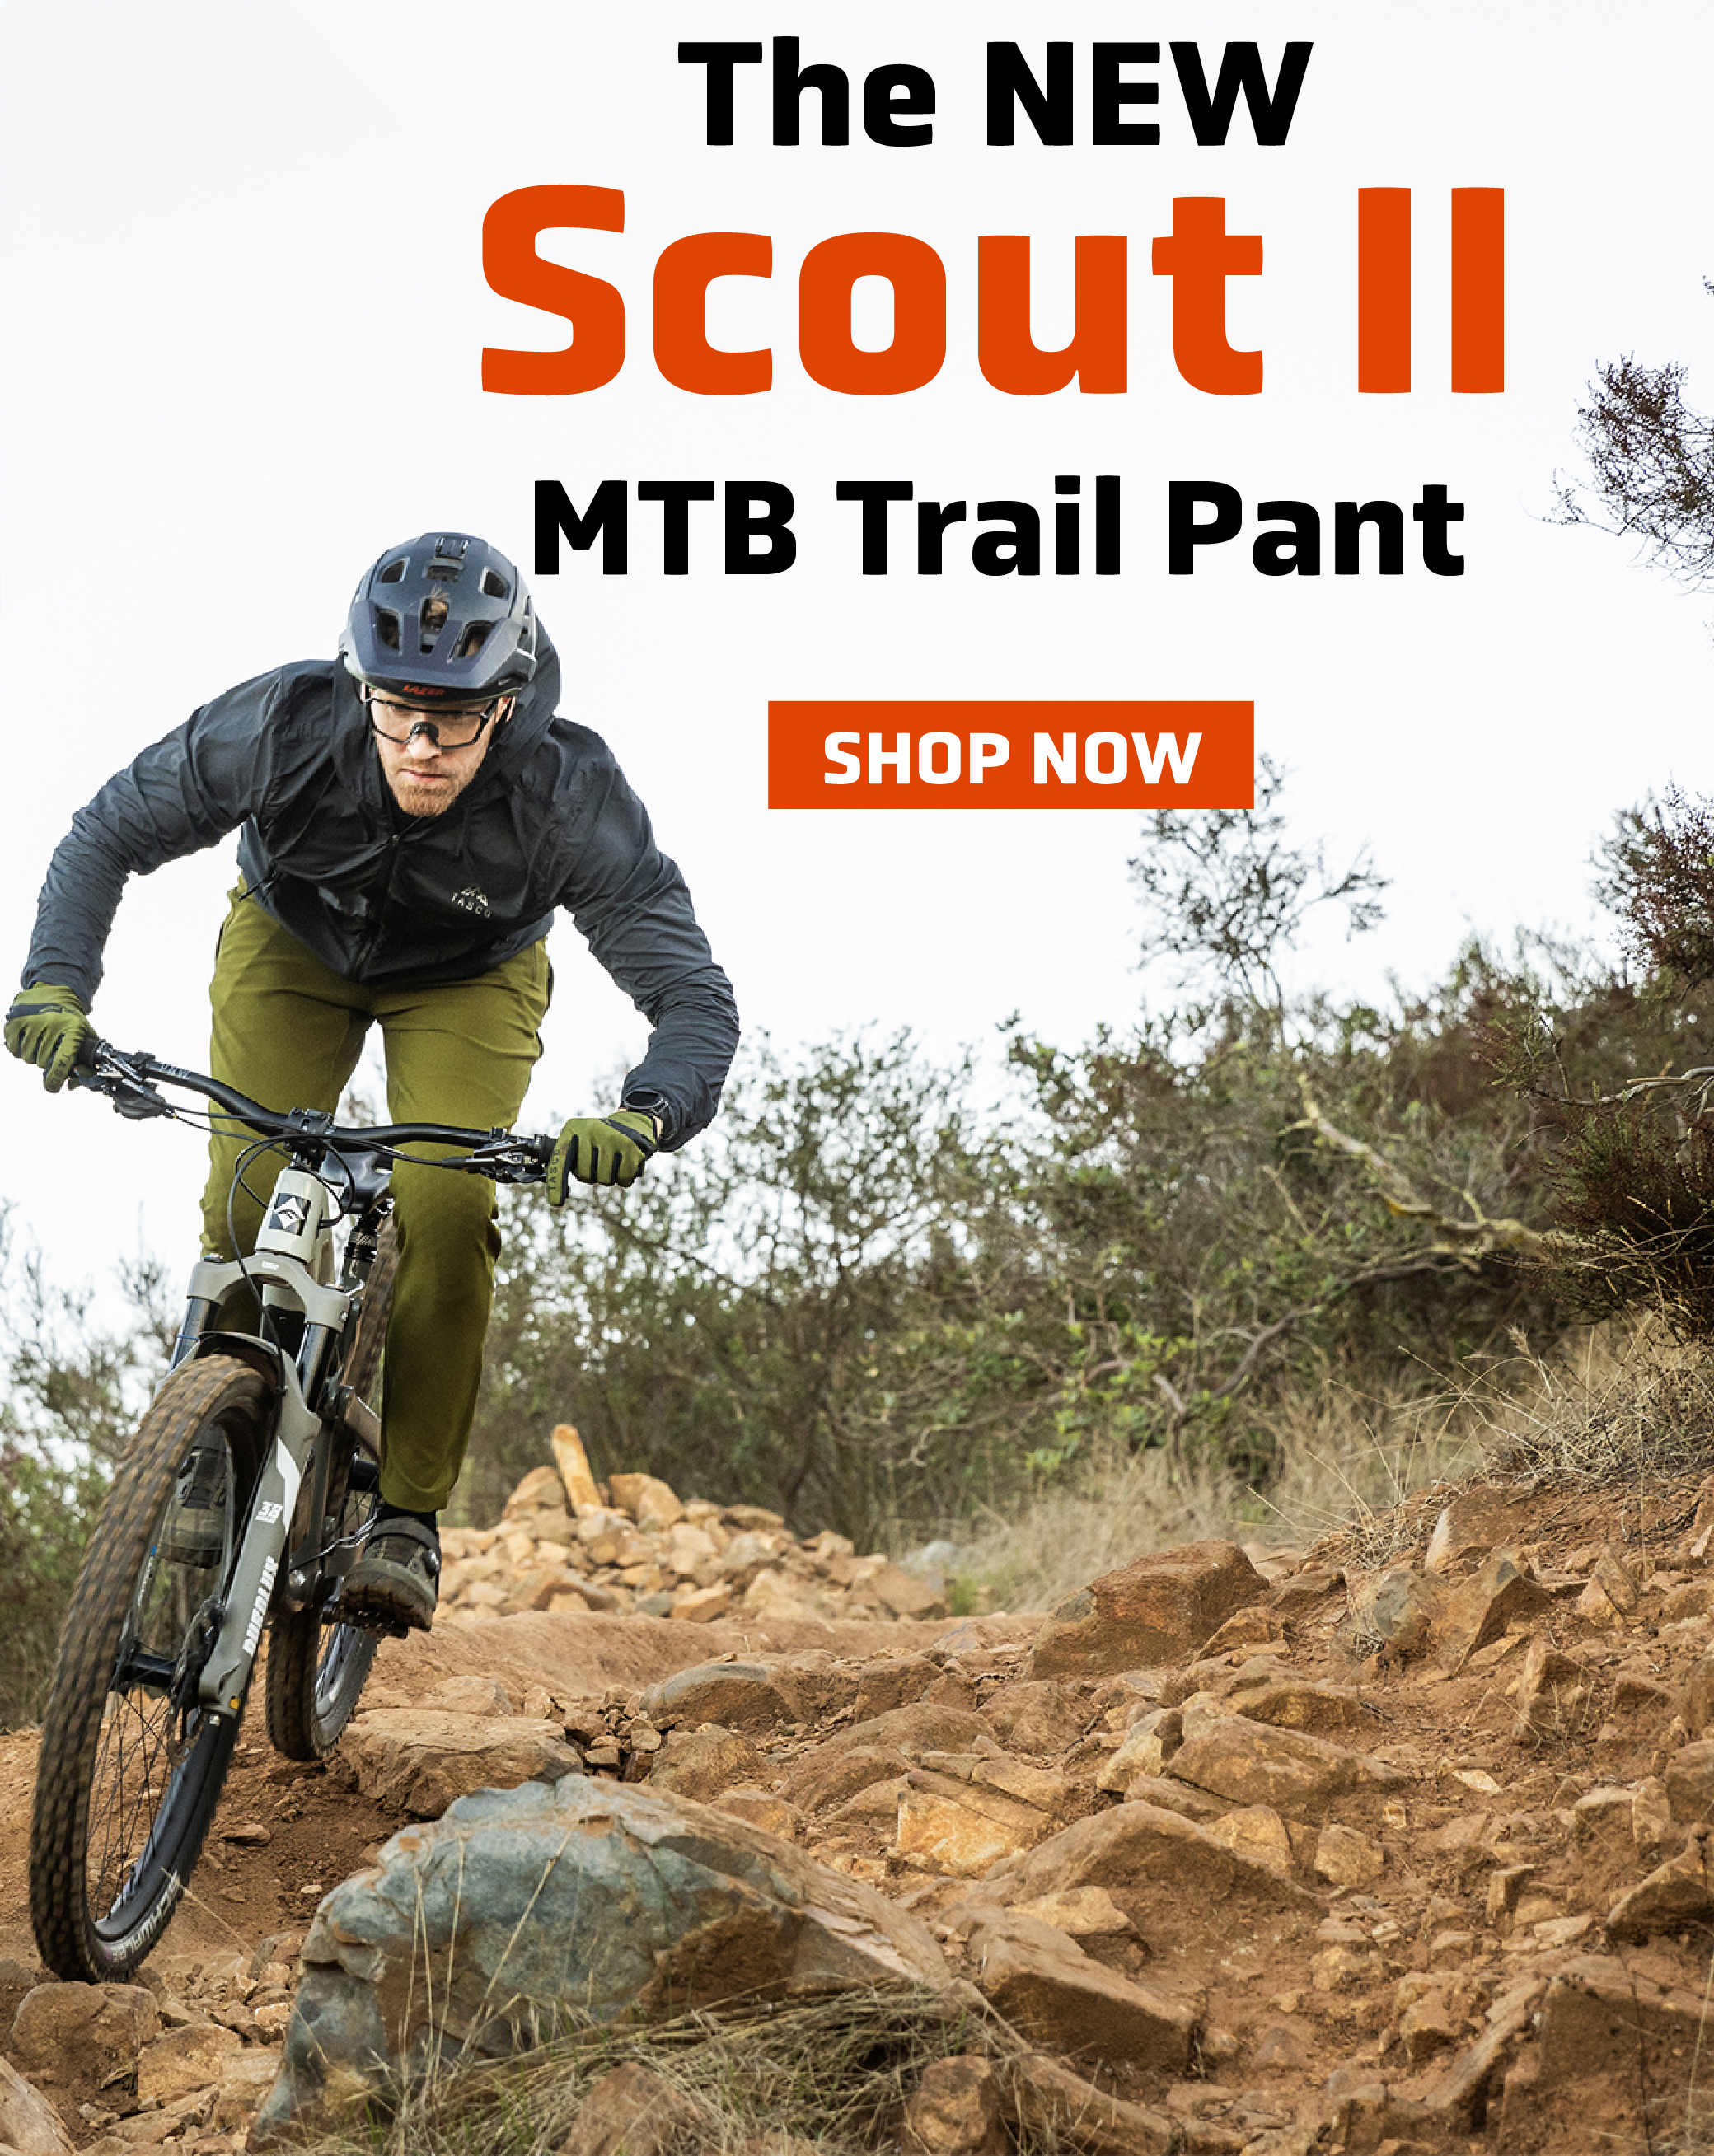 TASCO Fir Green Scout II Mtb Trail pant and Dawn Patrol Gloves on Rider 